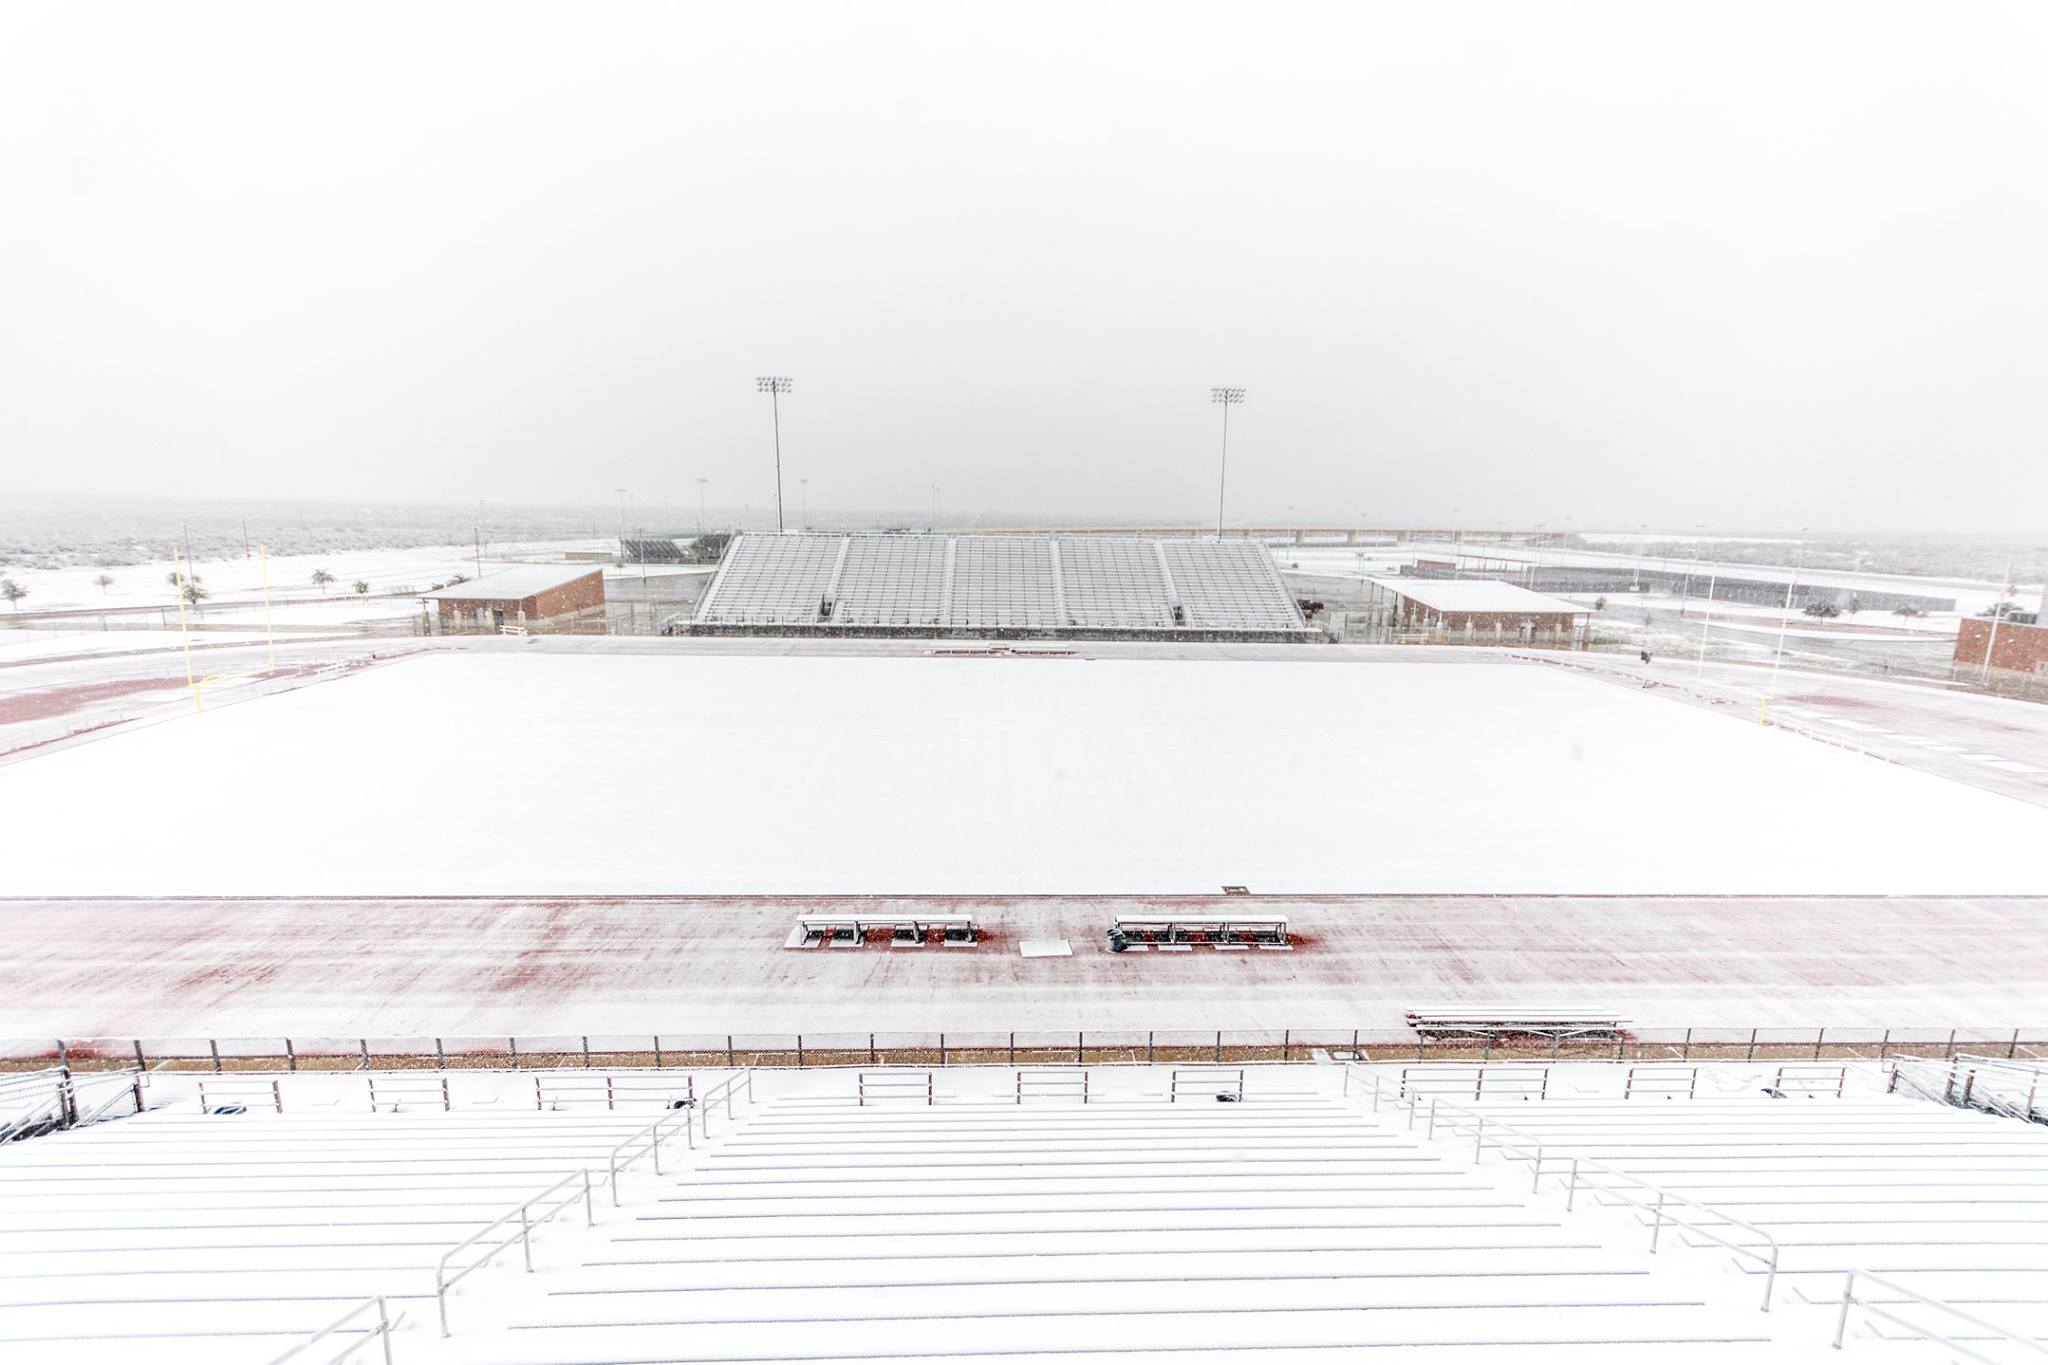 sac stadium covered by snow dec 2017.jpg